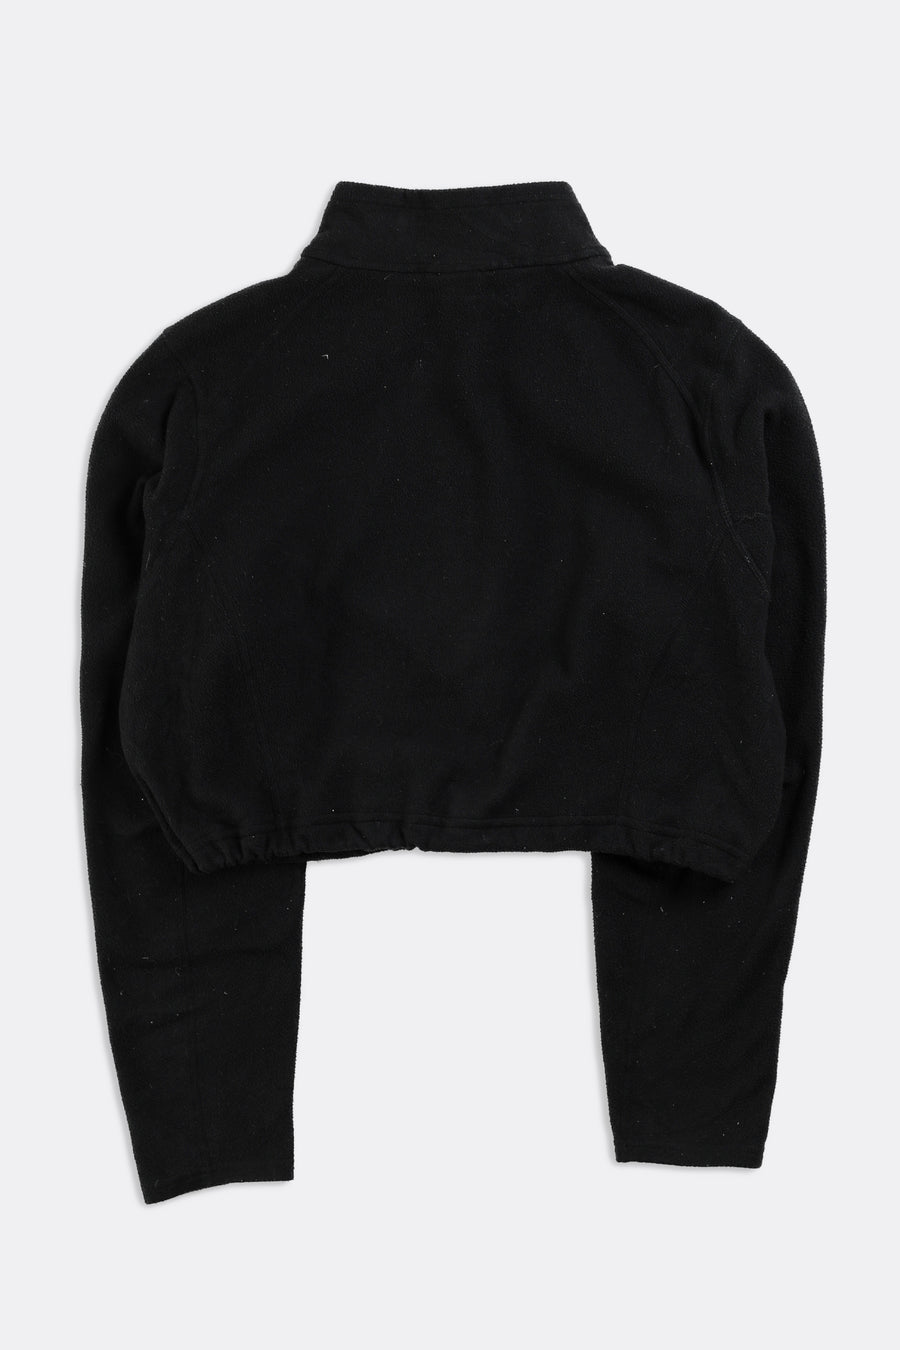 Rework North Face Crop Fleece Sweater - XS, S, M, L, XL